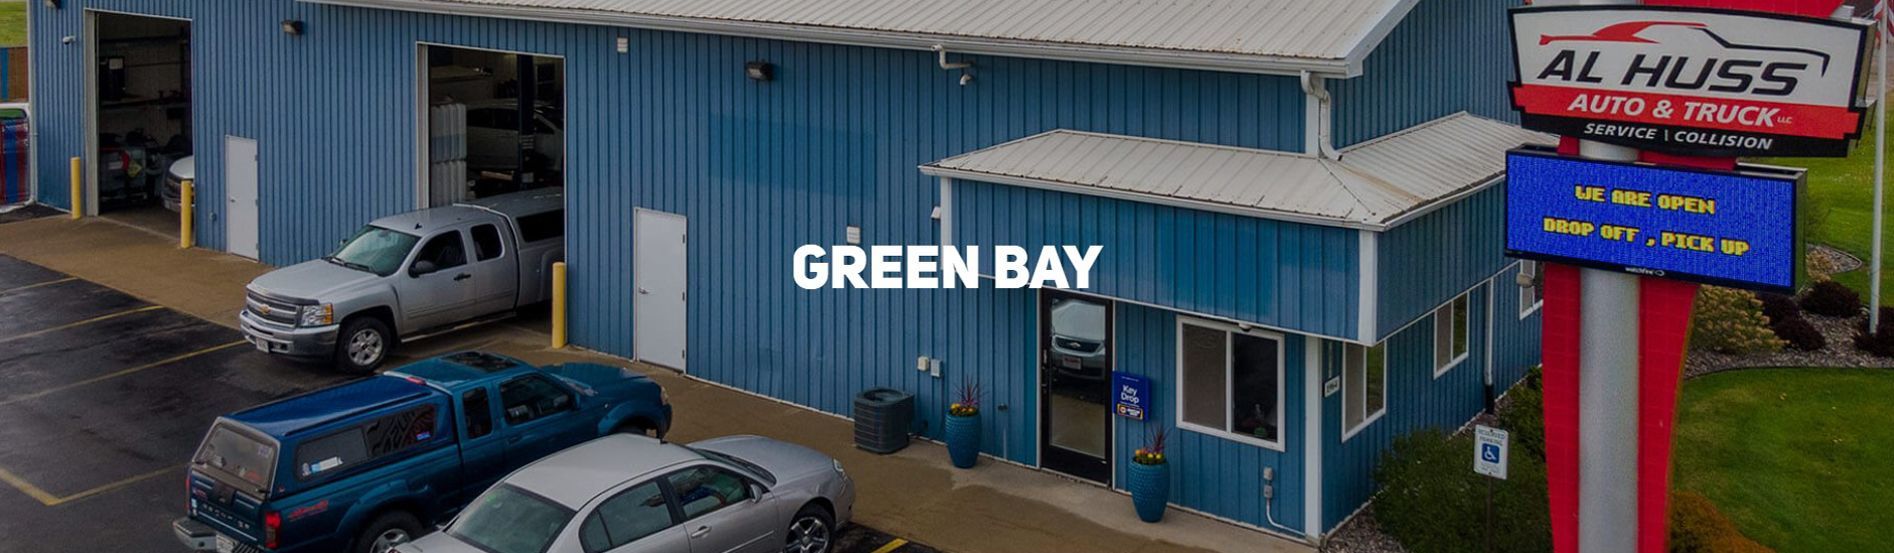 Green Bay, WI Location